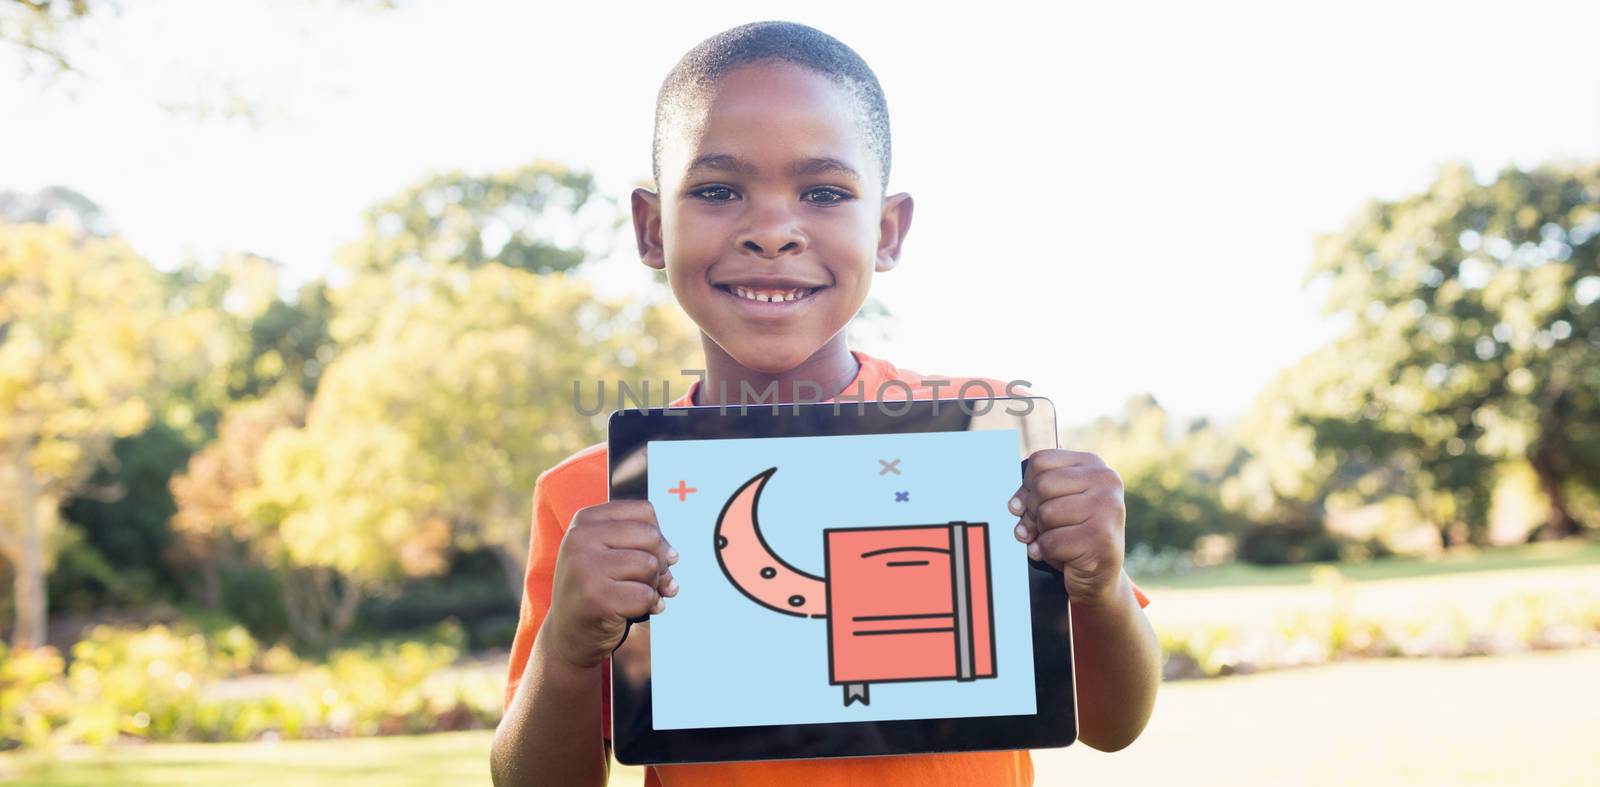 Print against portrait of boy smiling while holding digital tablet